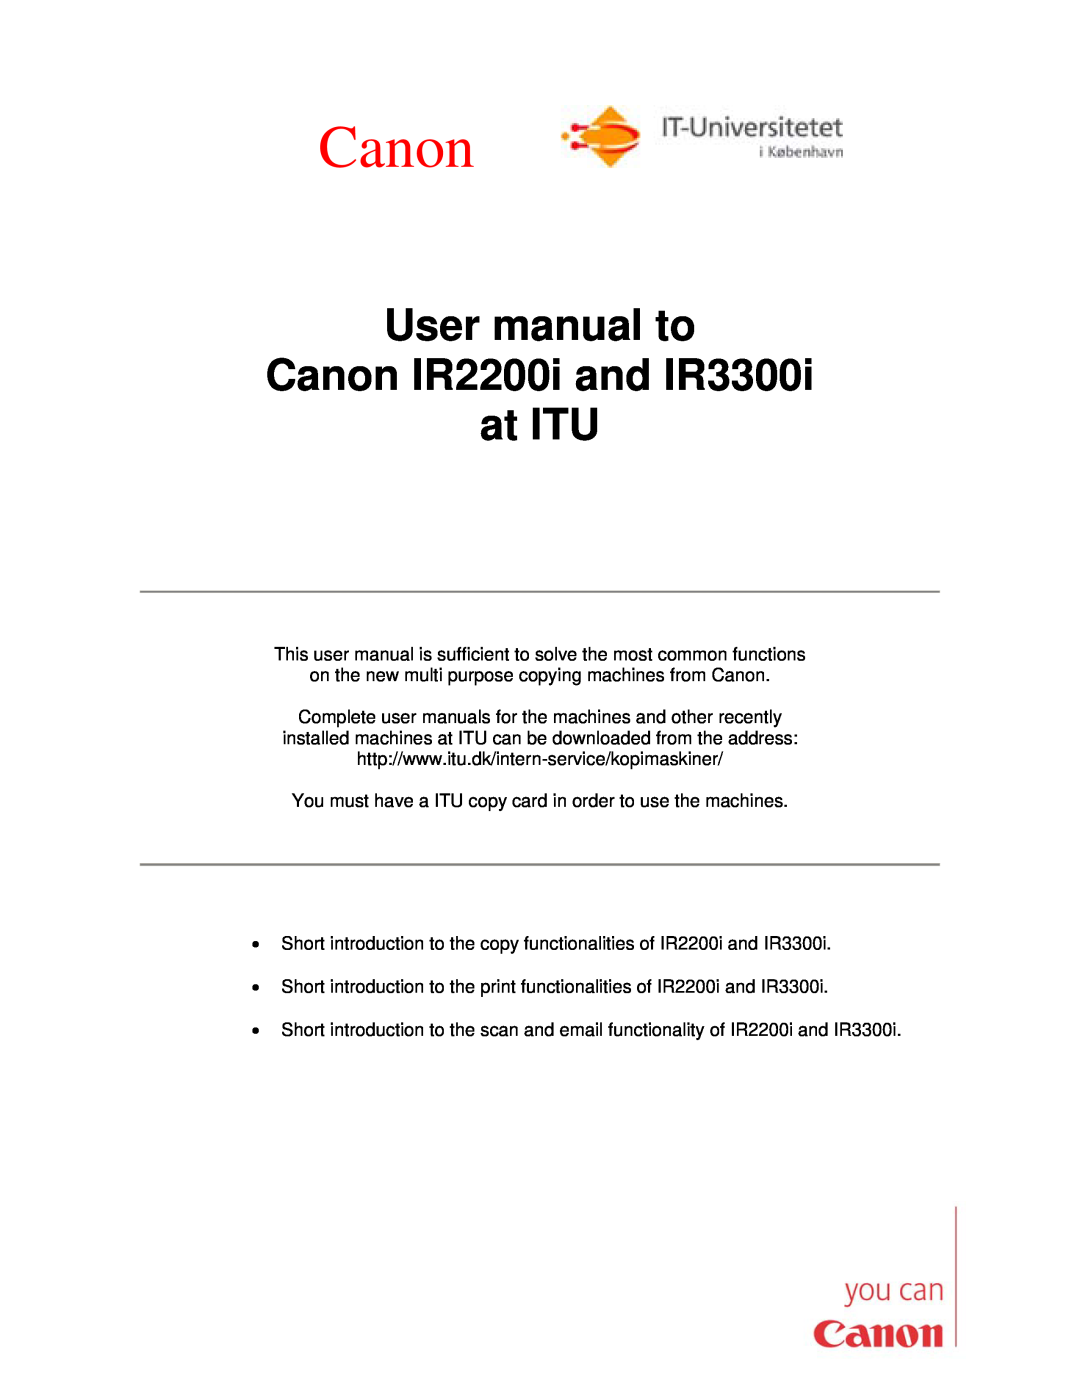 Canon user manual User manual to Canon IR2200i and IR3300i at ITU 